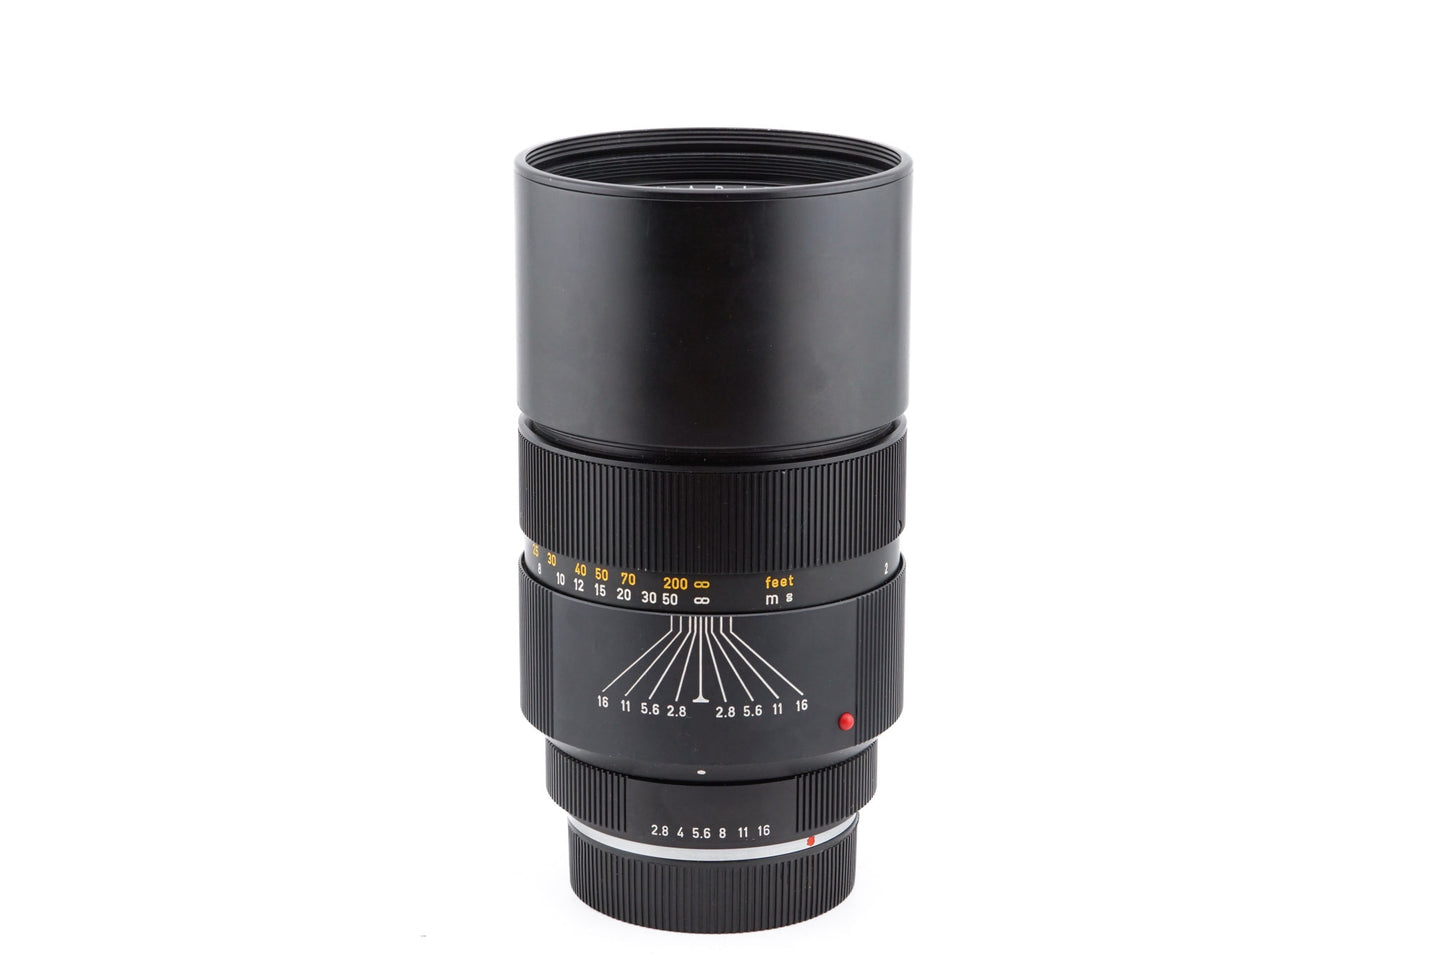 Leica 180mm f2.8 Elmarit-R (3-Cam / 11919) - Lens